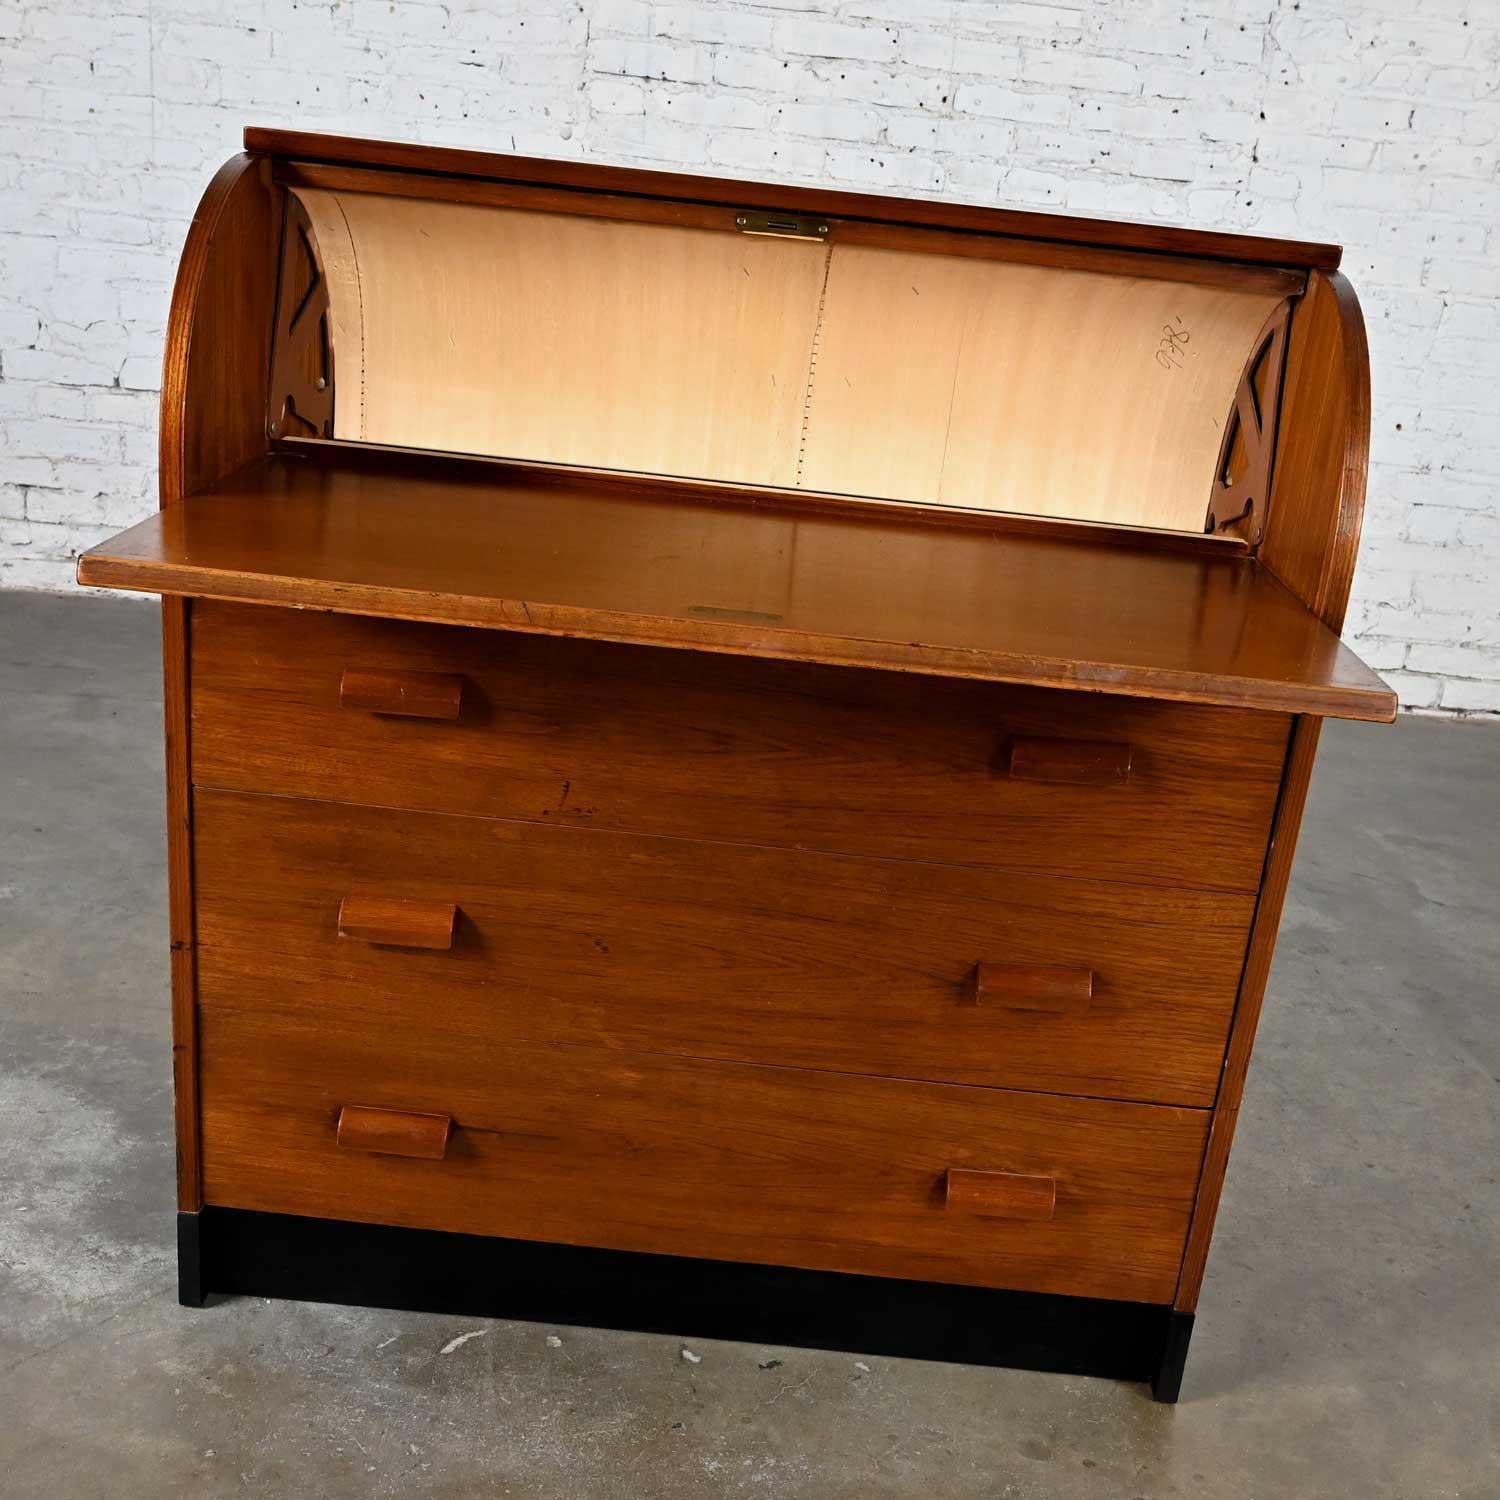 Mid-20th Century Scandinavian Modern Teak Roll Top Desk or Dresser For Sale 3